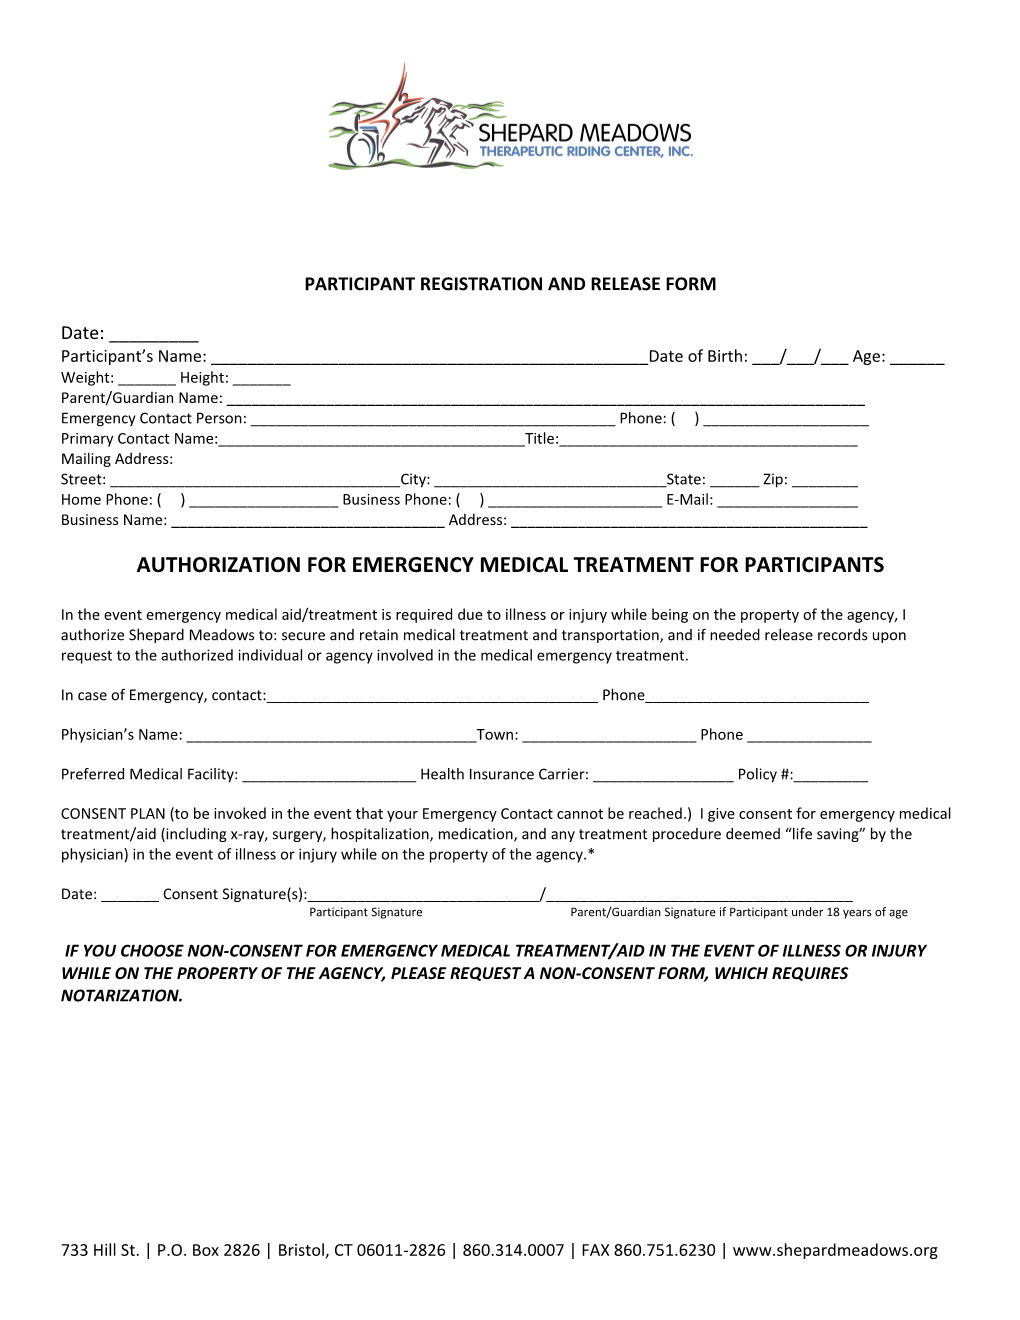 Authorization for Emergency Medical Treatment